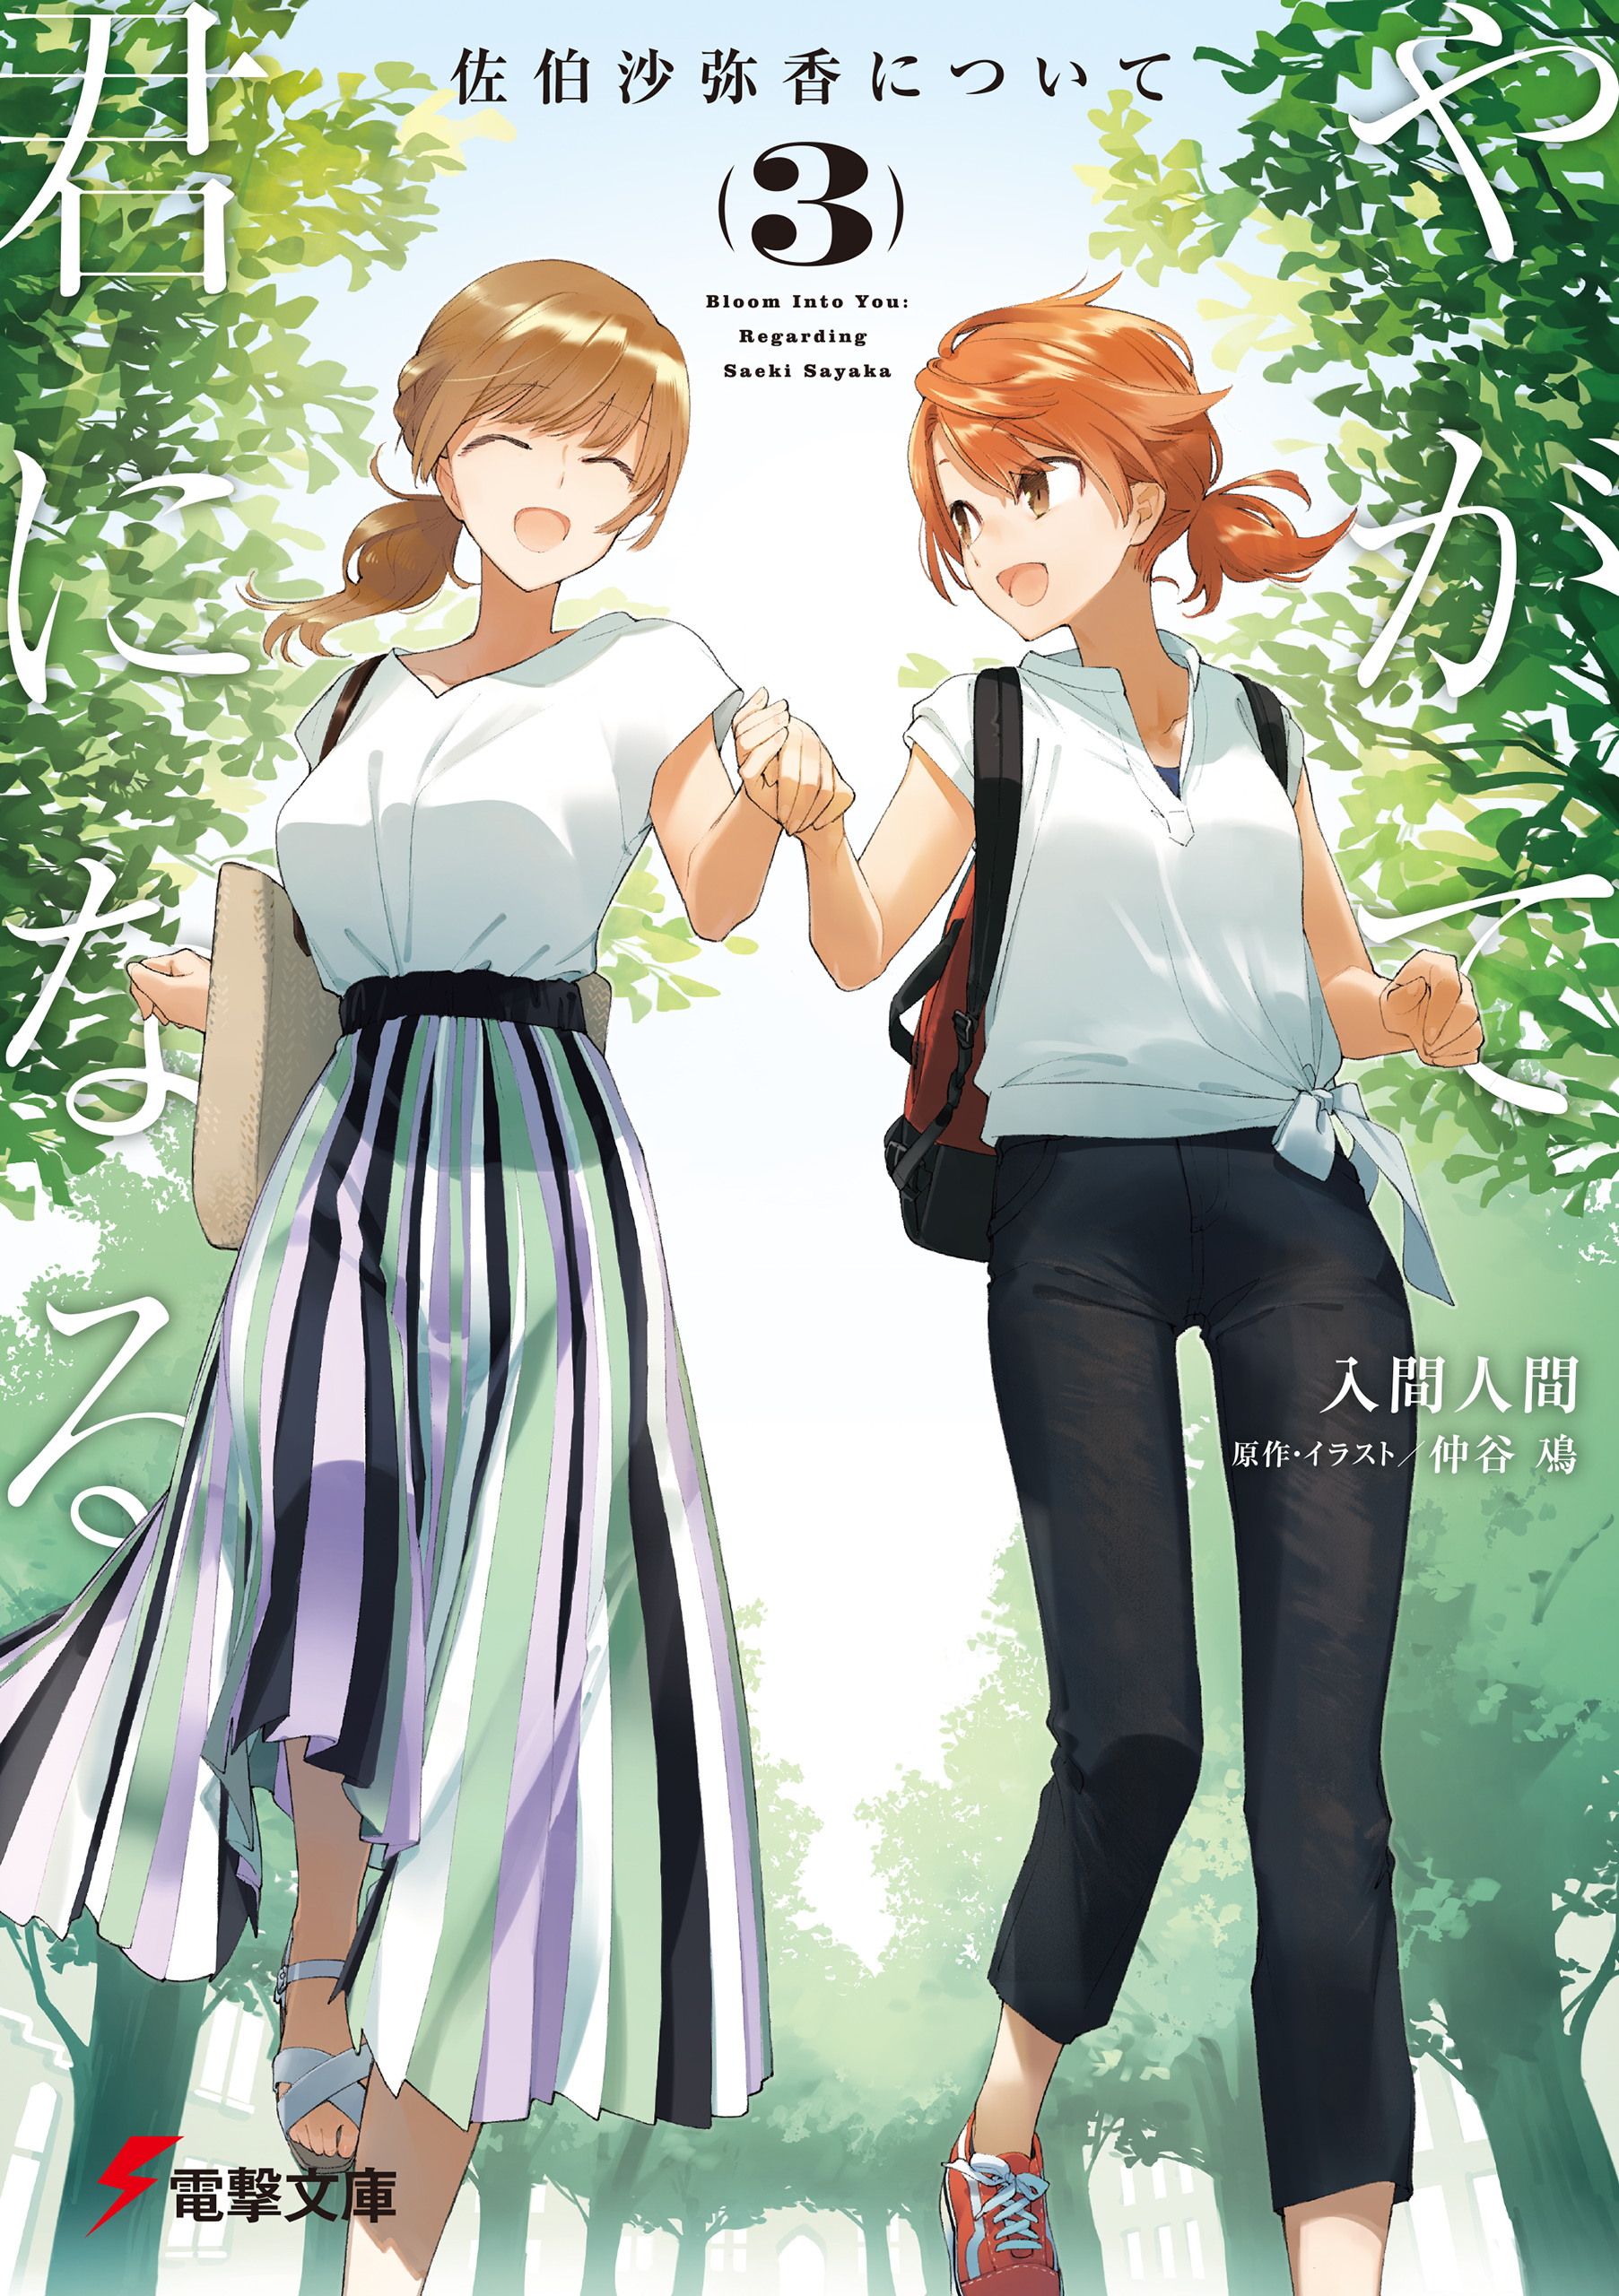 Bloom Into You, chapter 38. Yagate Kimi ni Naru - English Scans